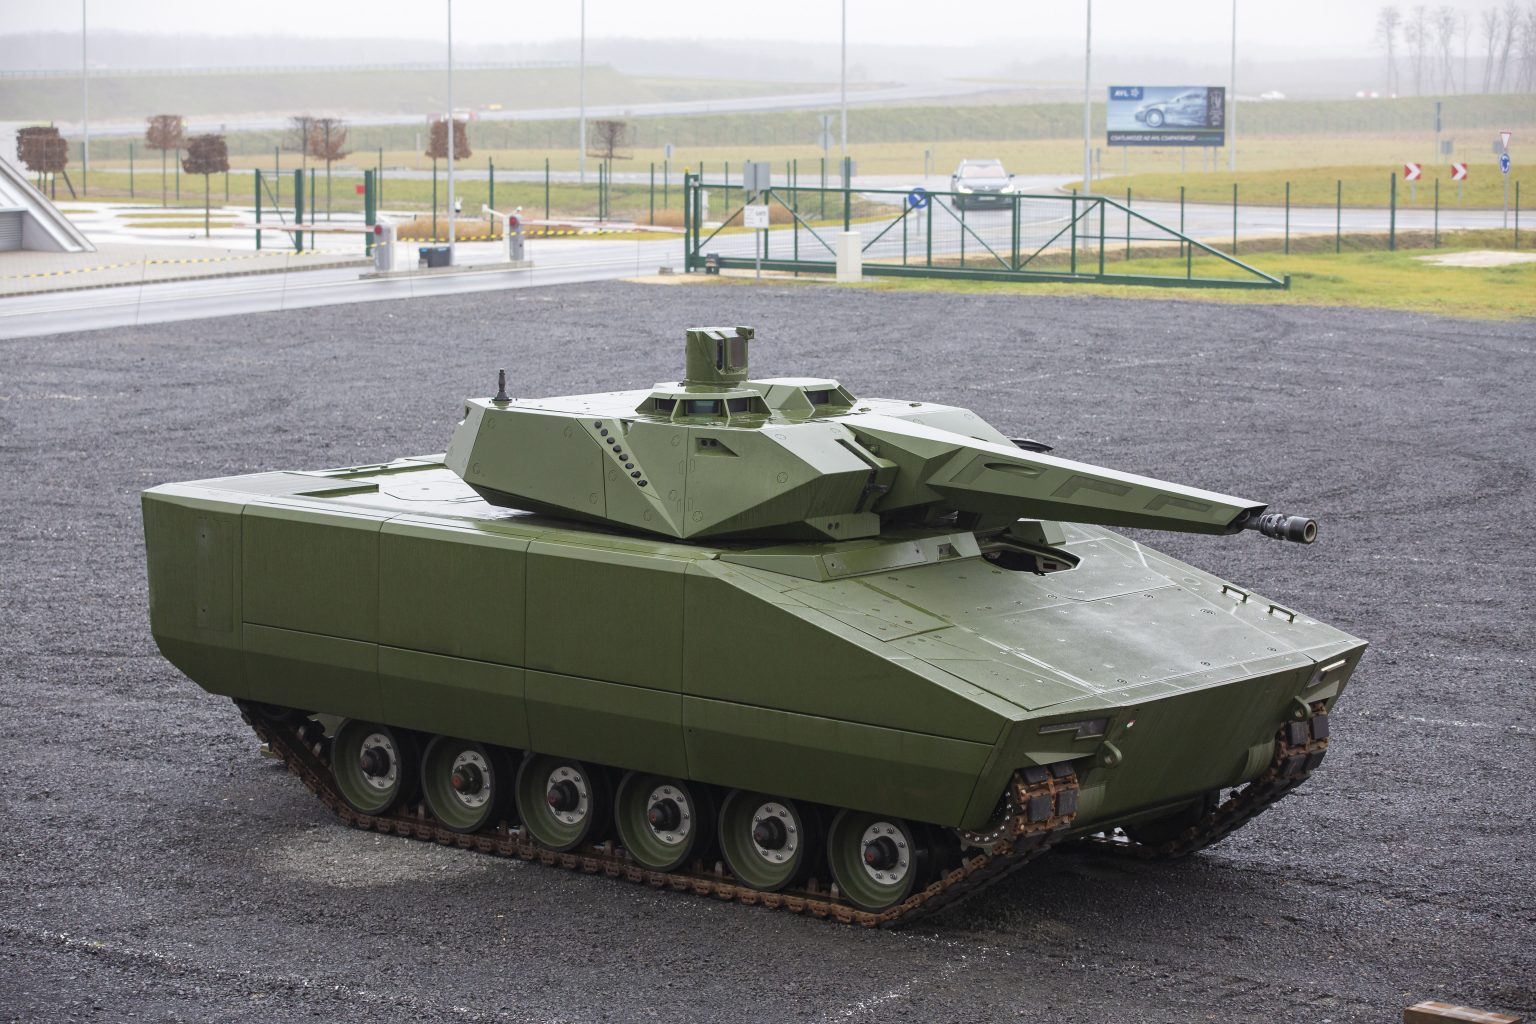 tanks the modern age lynx